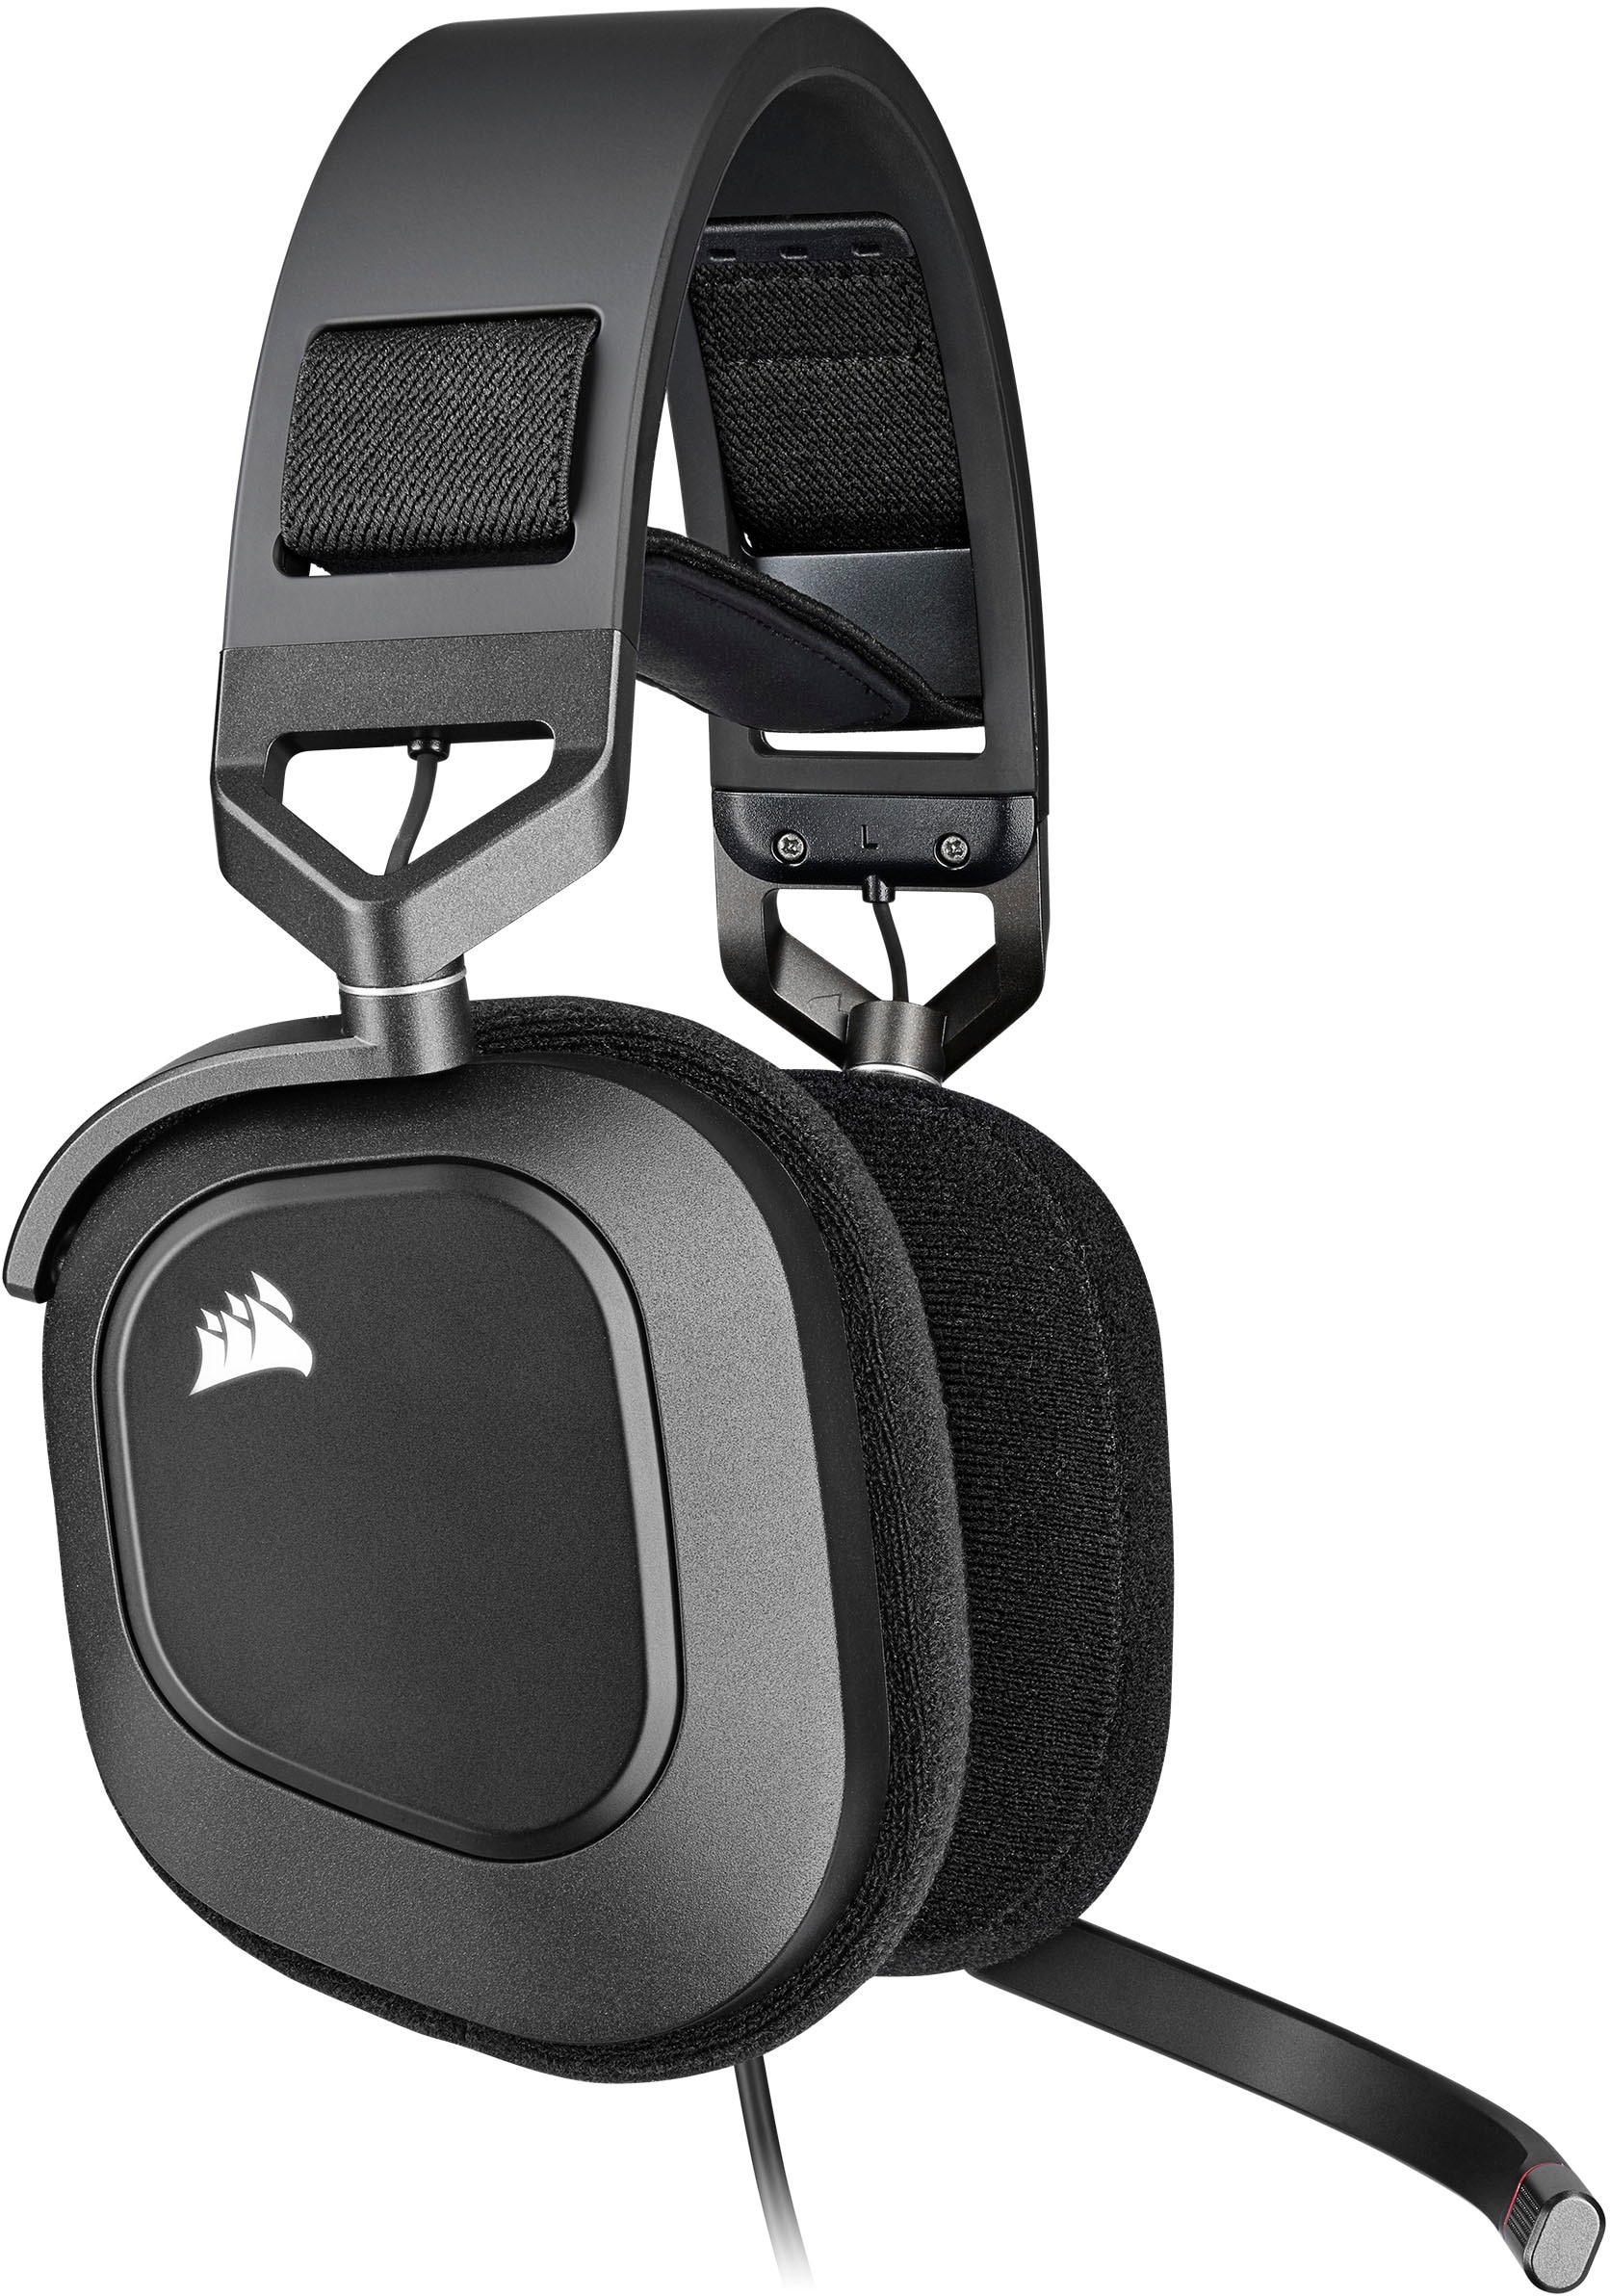 Corsair Gaming-Headset »HS80«, Premium, SURROUND